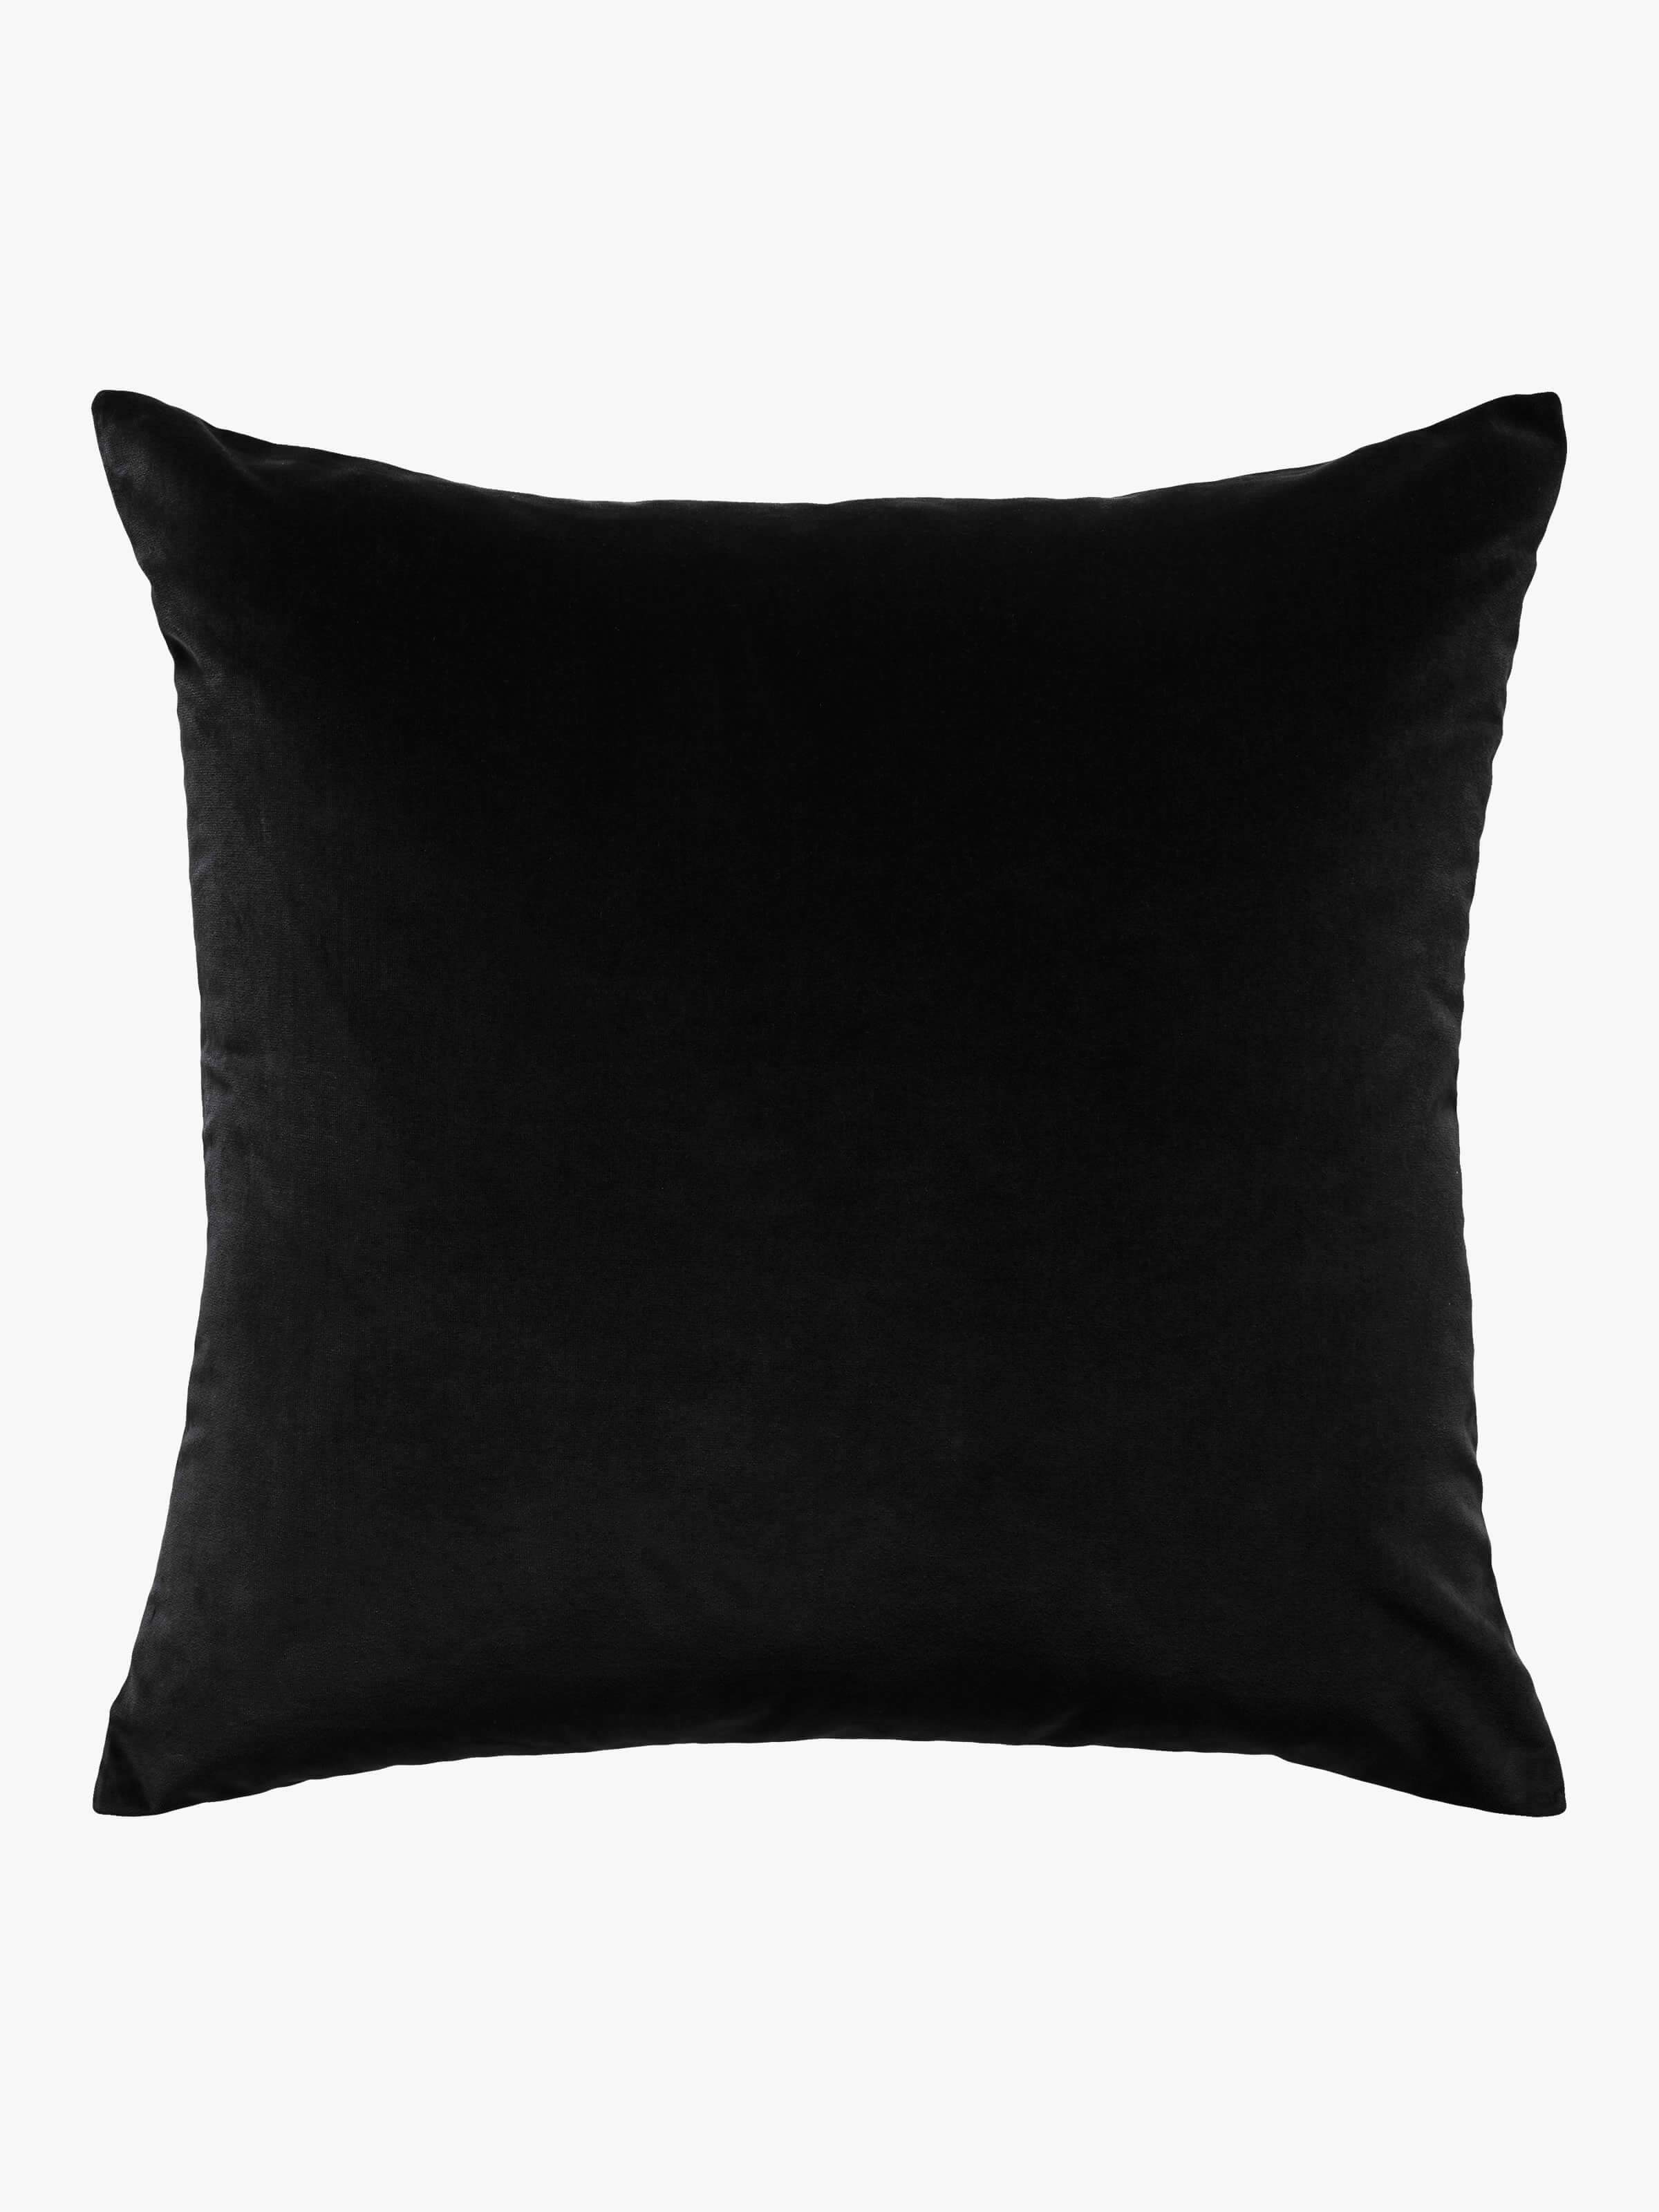 Etro Black Cushion Cushion 2020 Etro Grand Cushion 